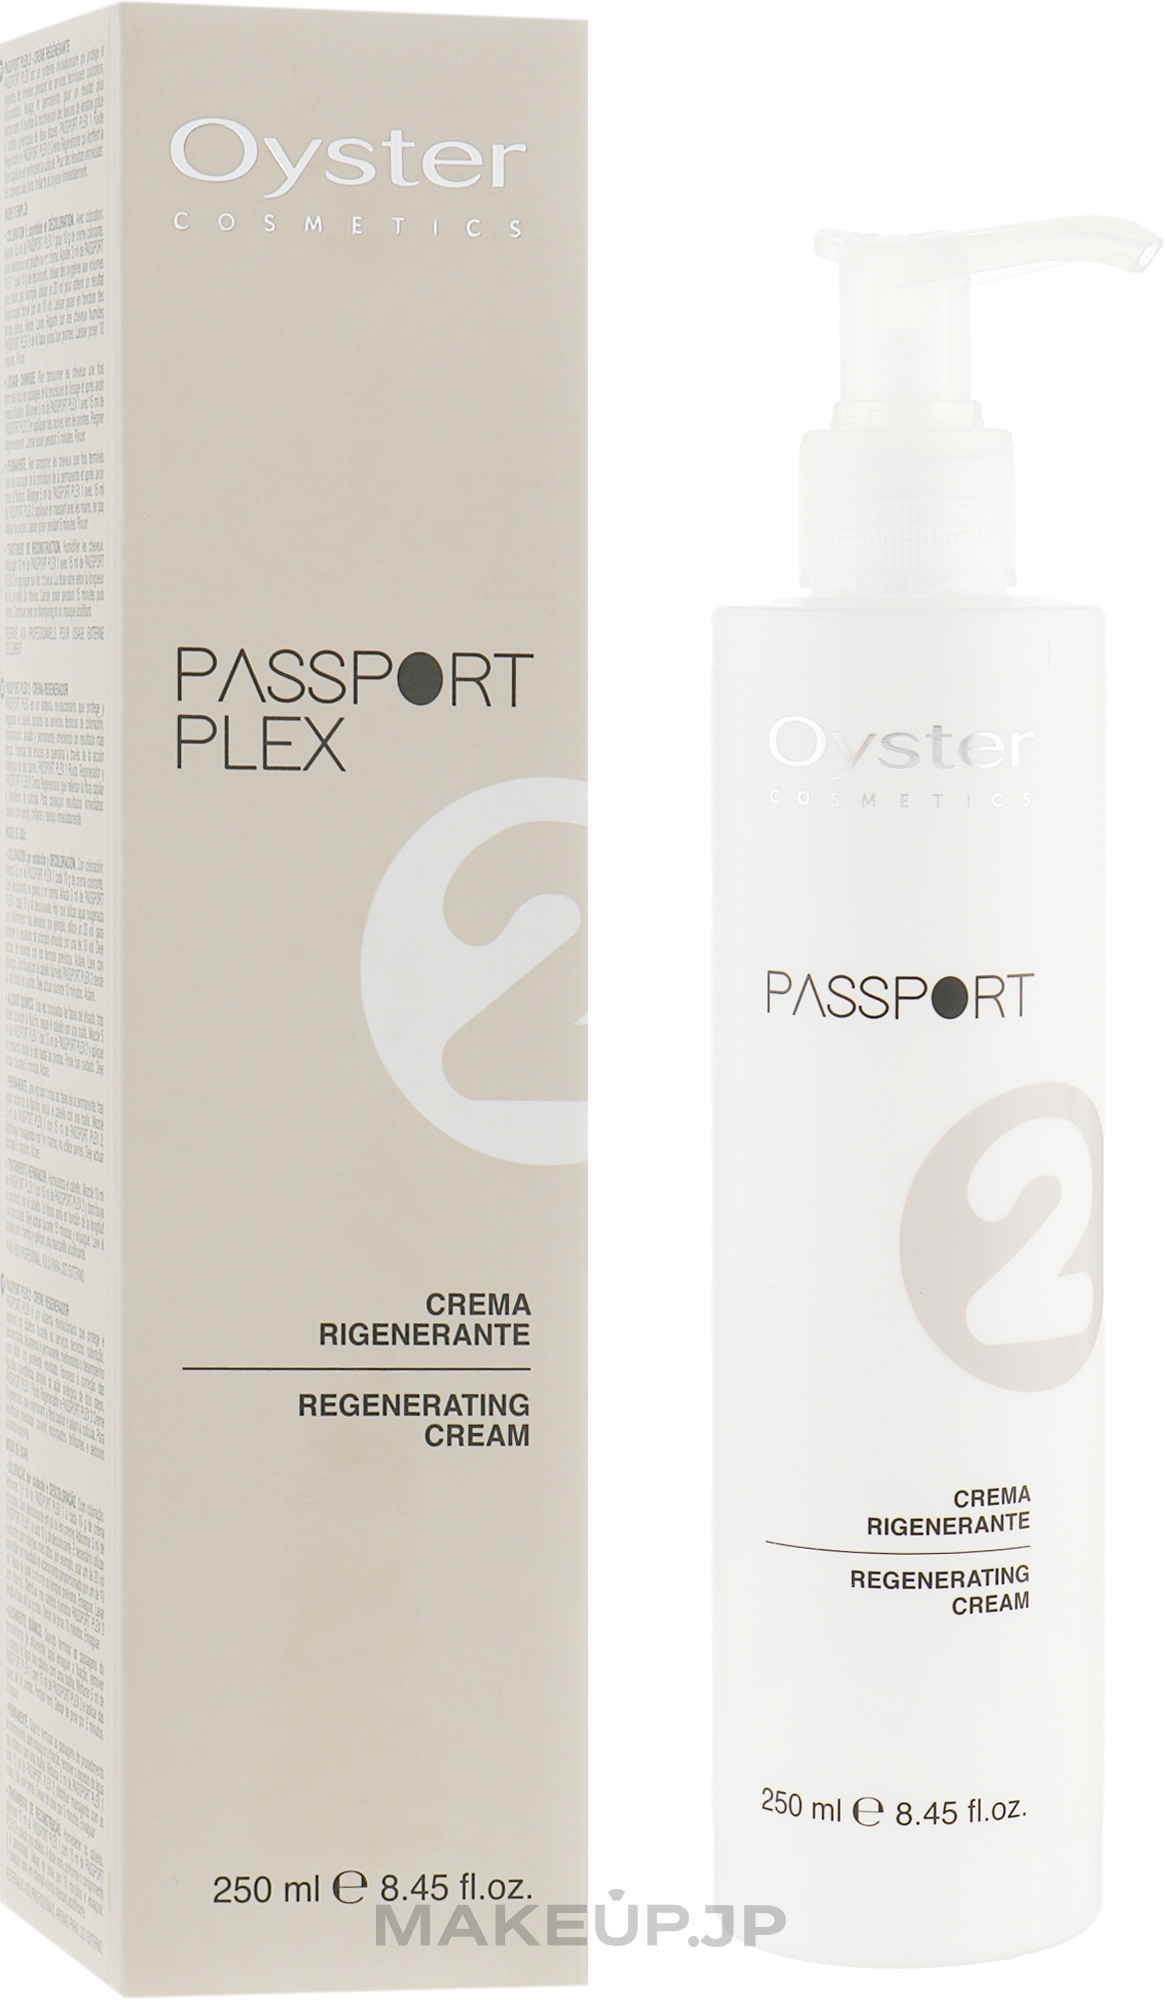 Regenerating Hair Cream - Oyster Cosmetics Passport 2 Regenerating Cream — photo 250 ml